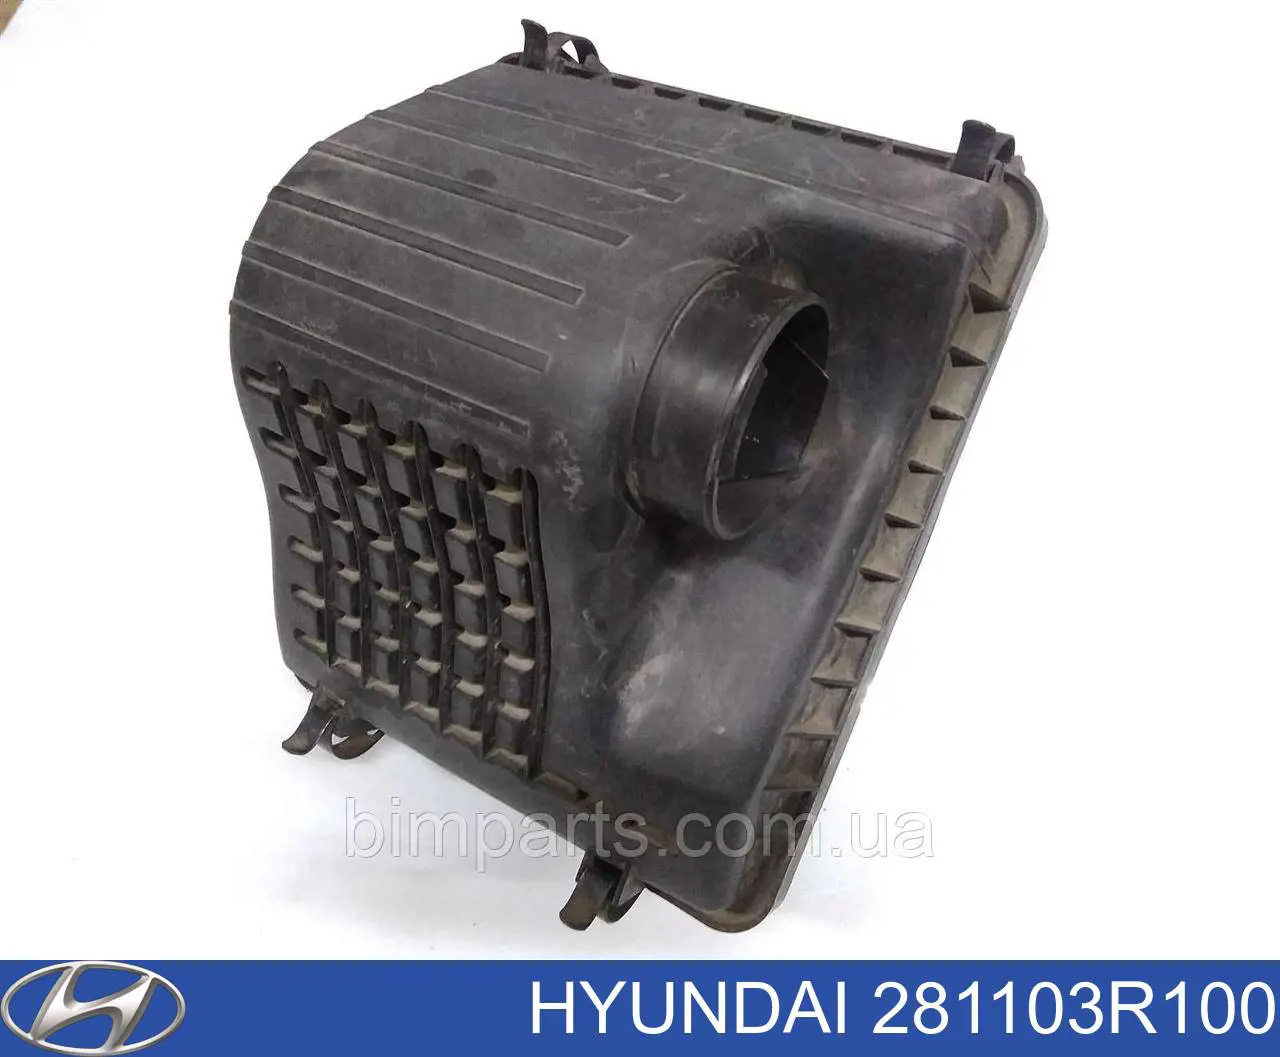 281103R100 Hyundai/Kia caixa de filtro de ar